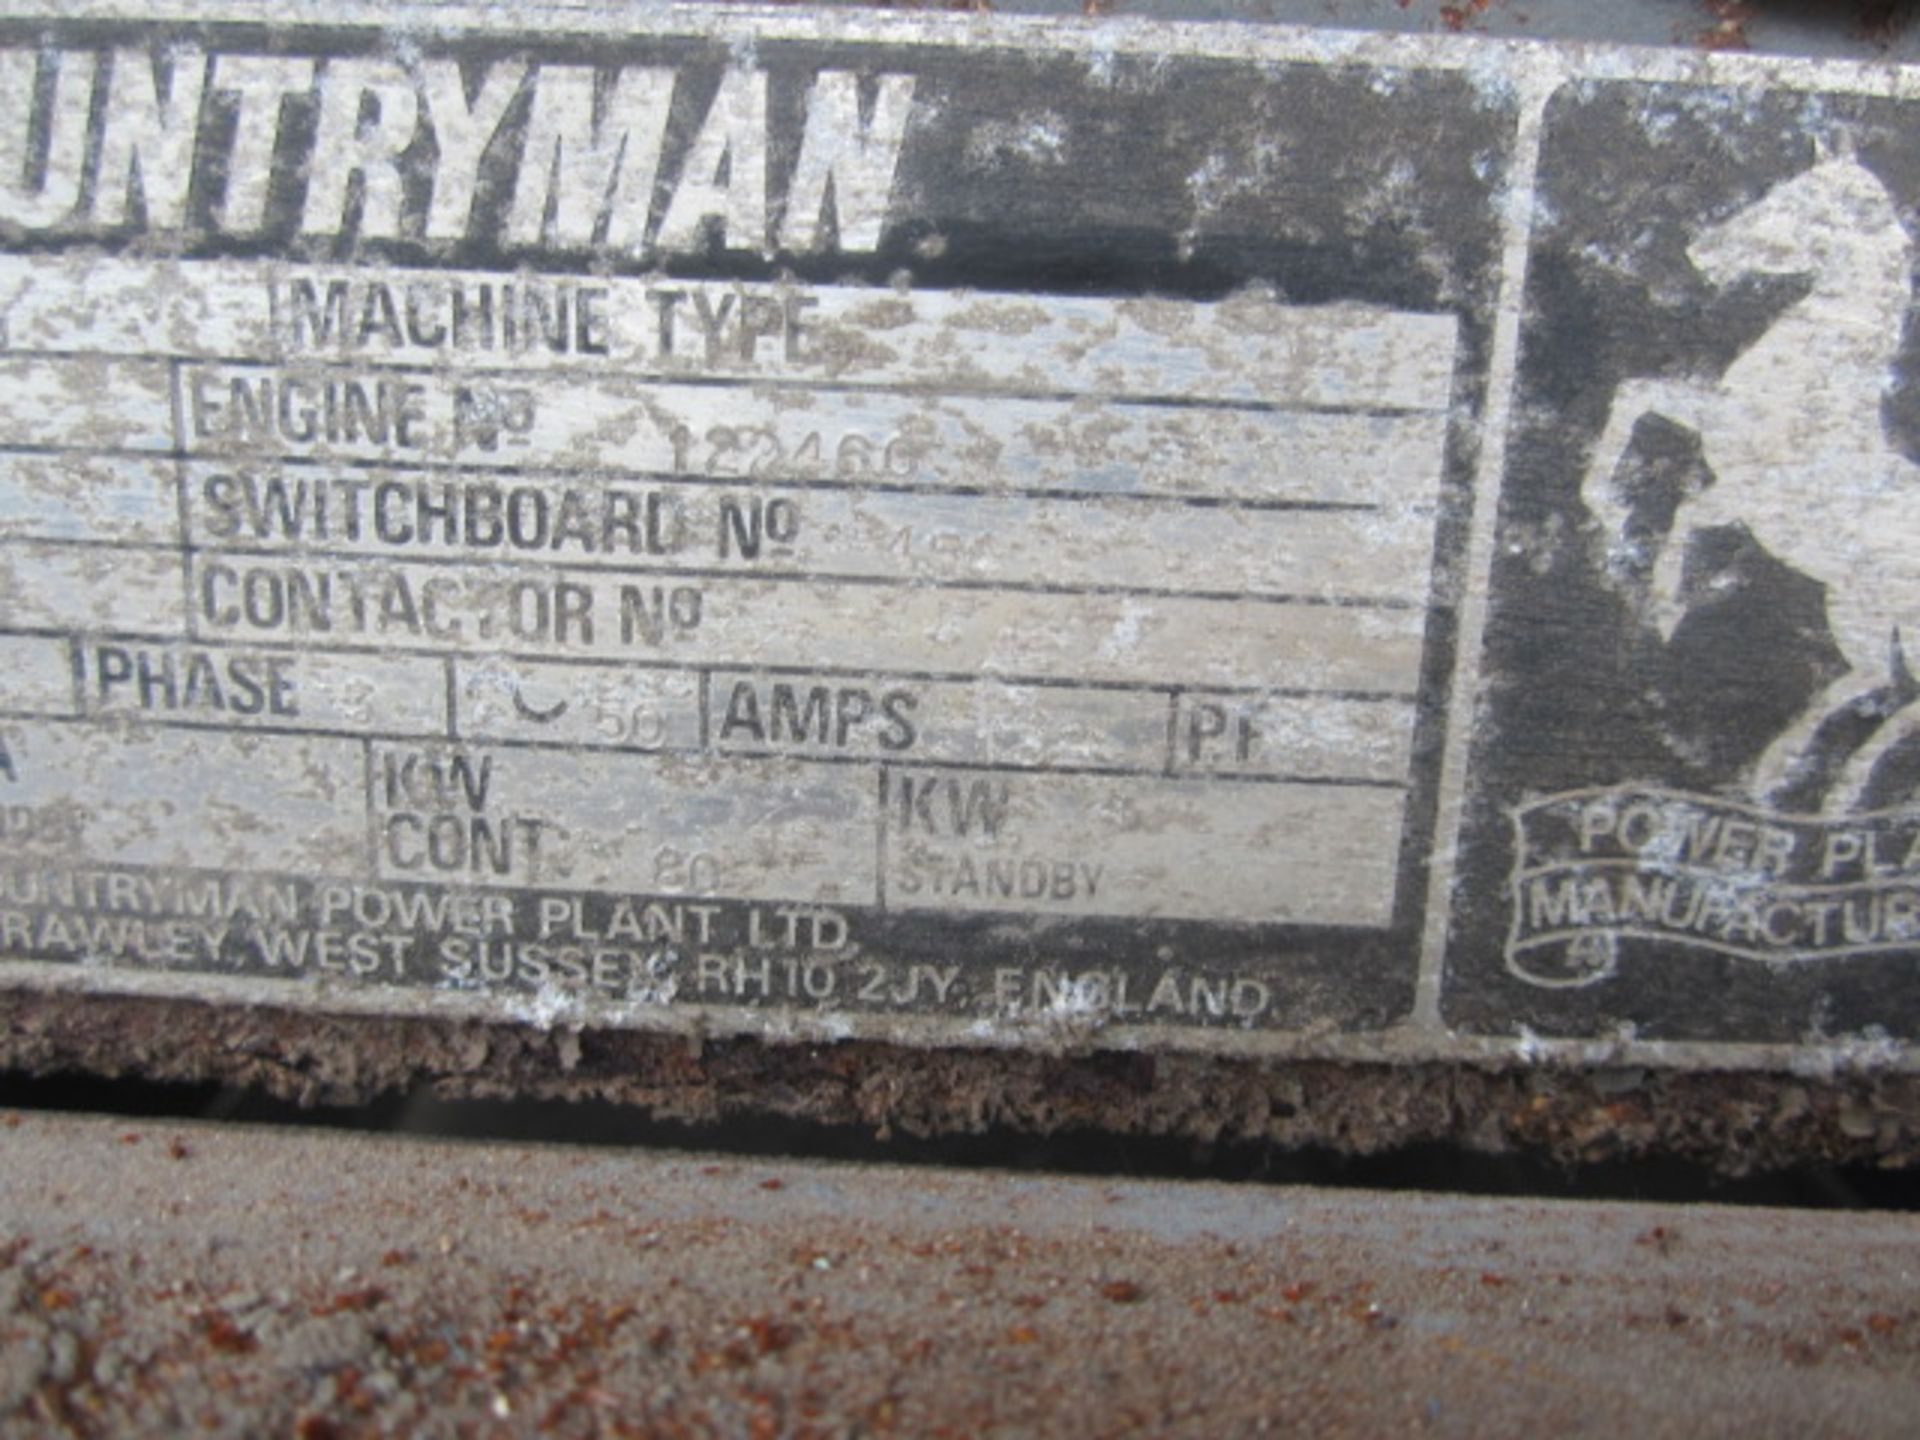 Countryman BTFHSC 100 stand by generator, skid mounted, Generator No. 2521 110, Engine No. 122460, - Image 5 of 7